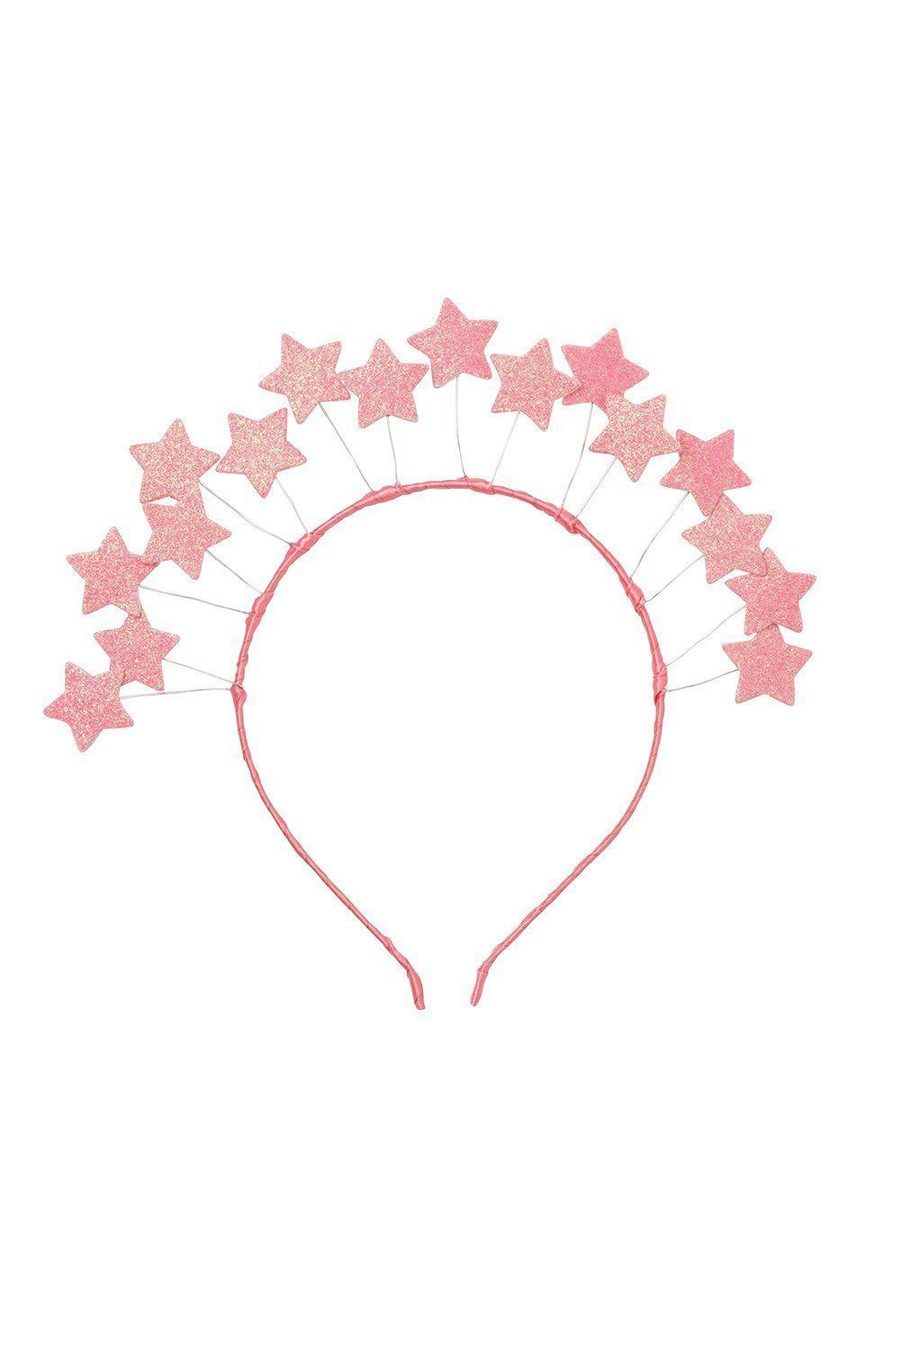 Floating Crown - Pink Glitter Stars